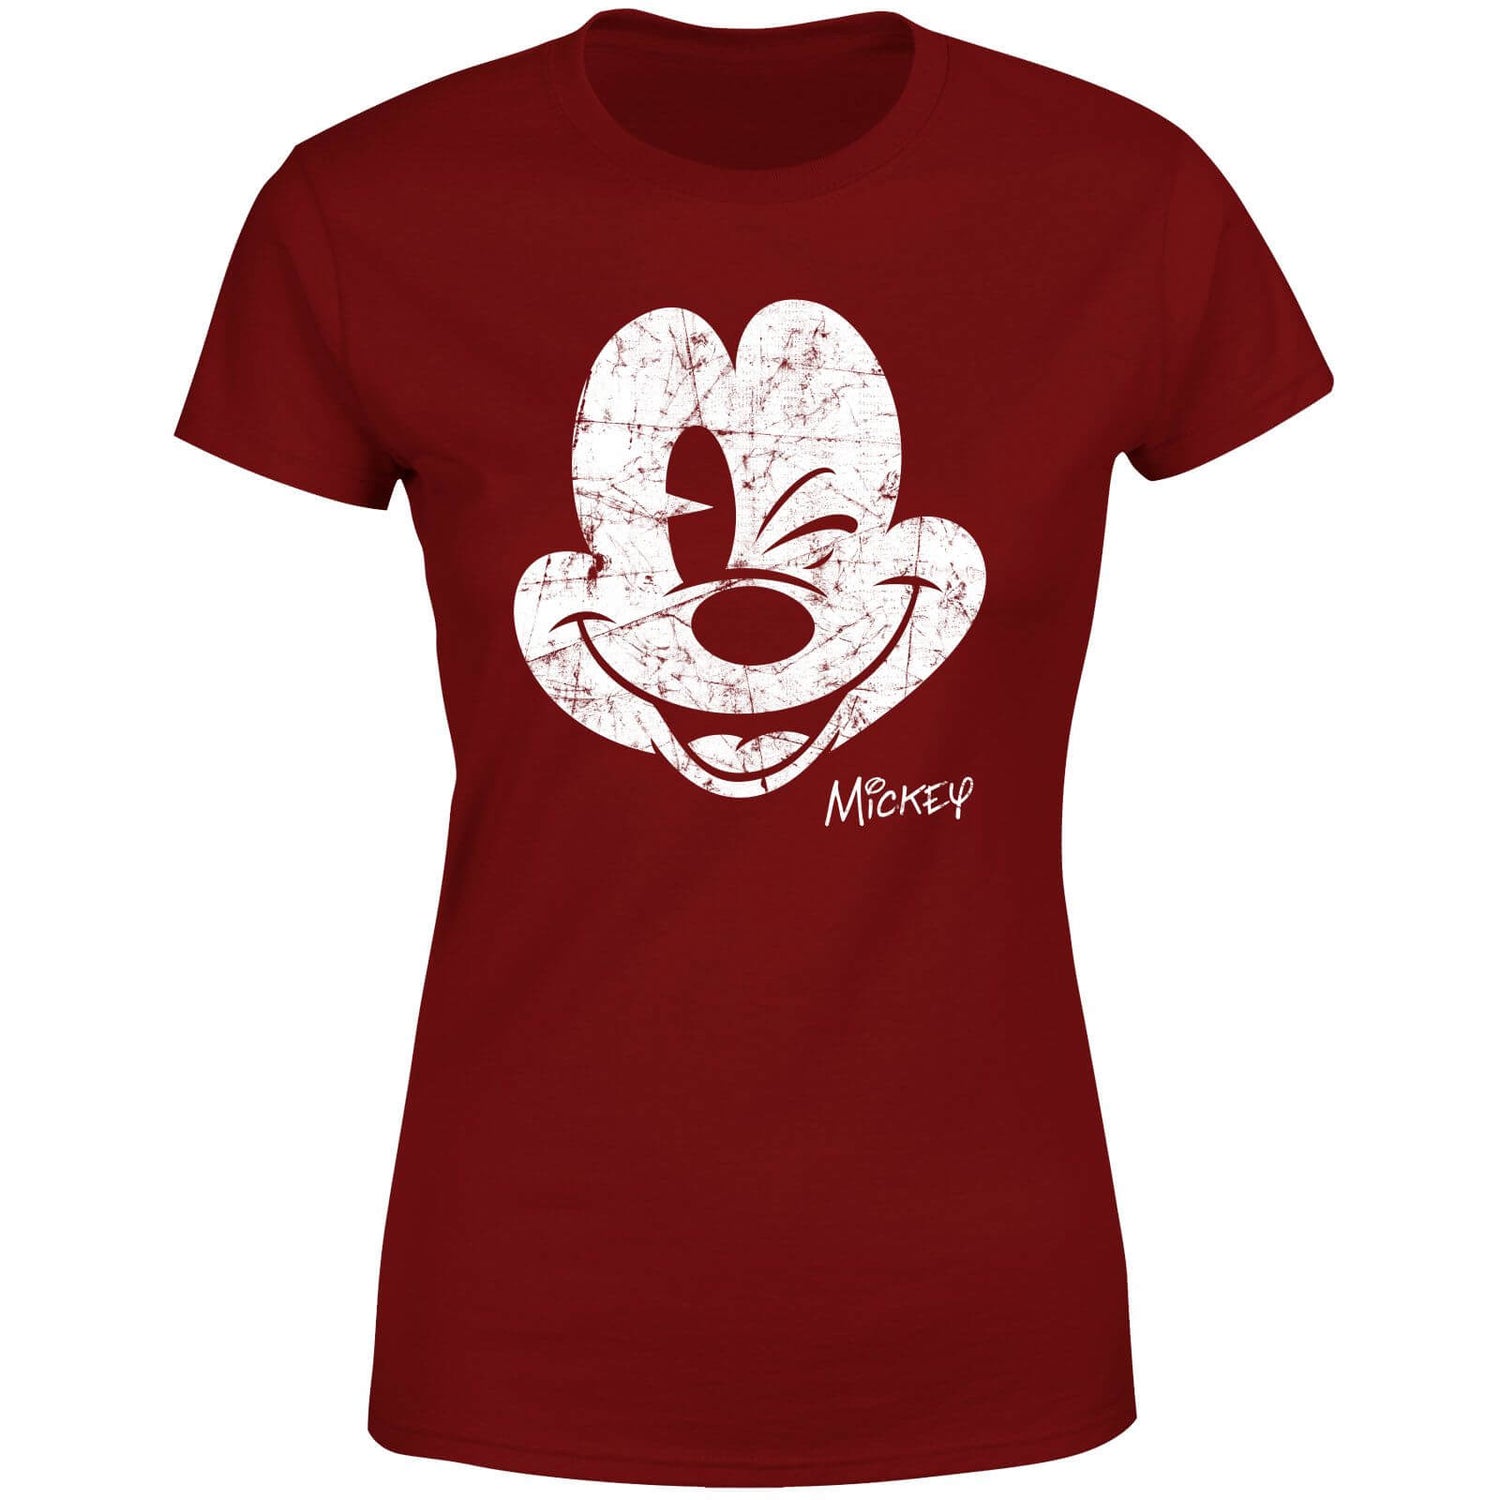 Disney Mickey Mouse Worn Face Women's T-Shirt - Burgundy